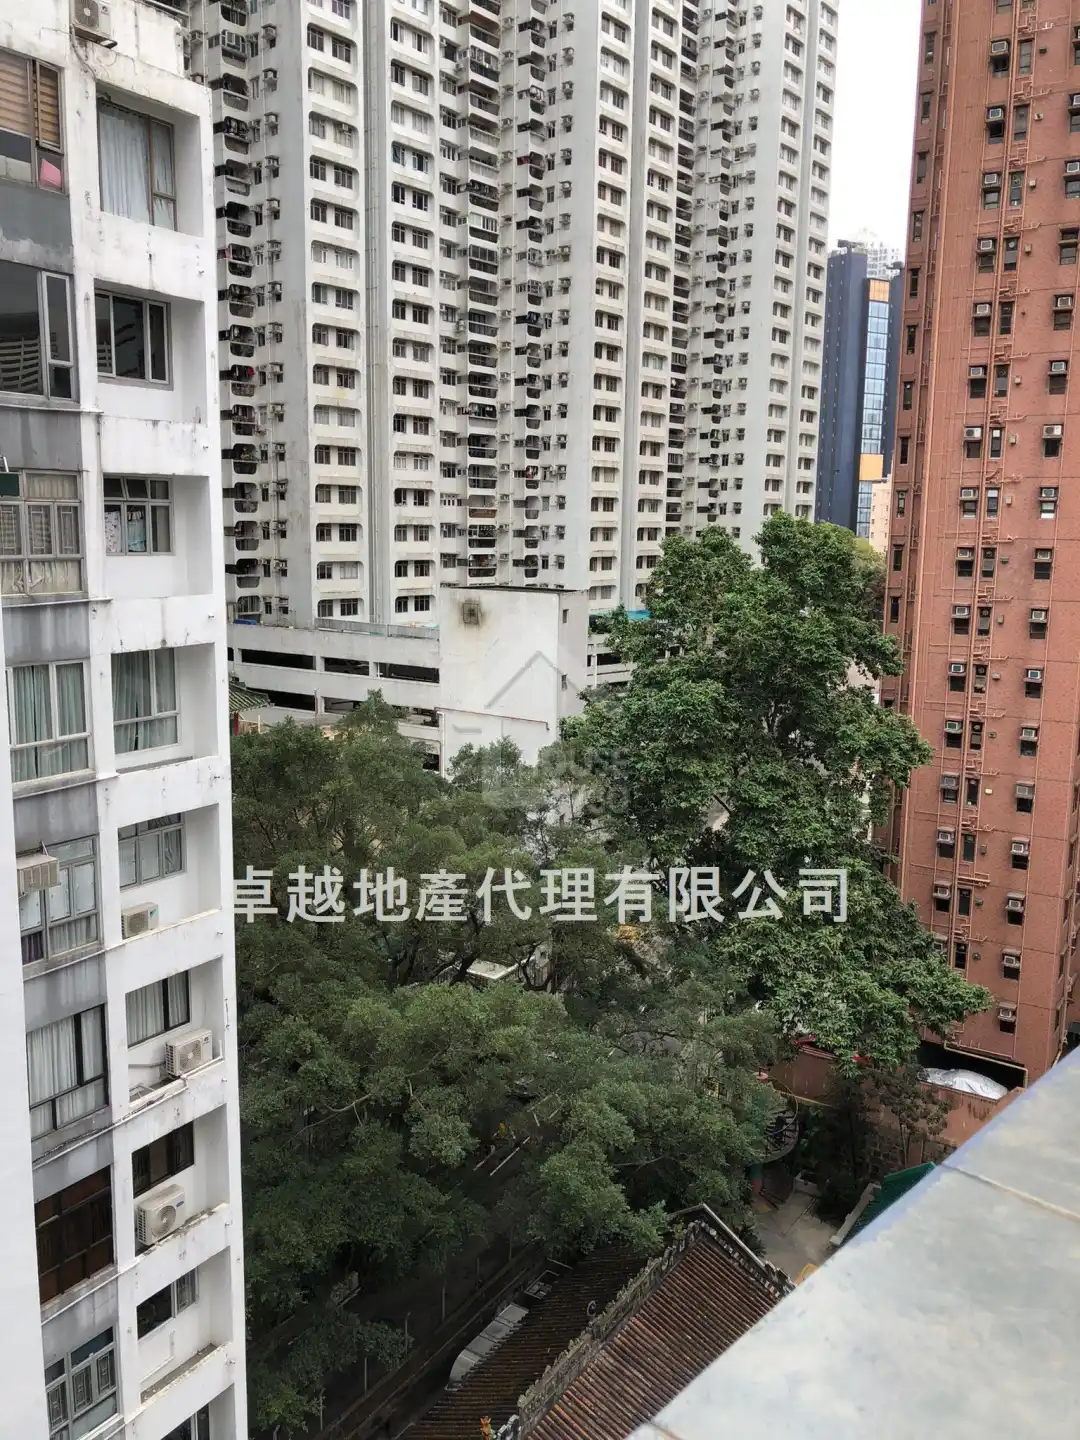 Tin Hau PAK LEE BUILDINGResidential Village apartment,village house pak lee  building - House730